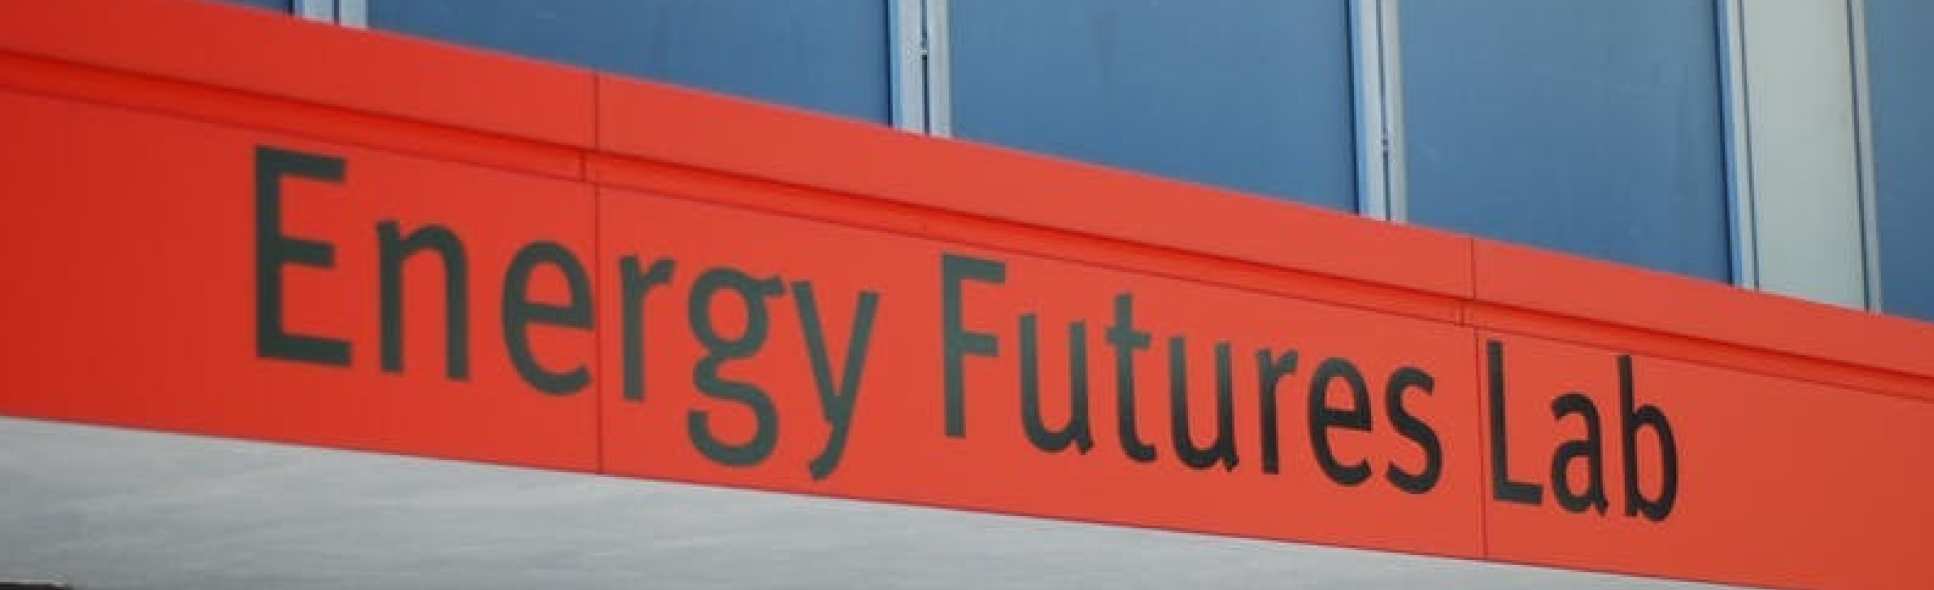 Energy Futures Lab